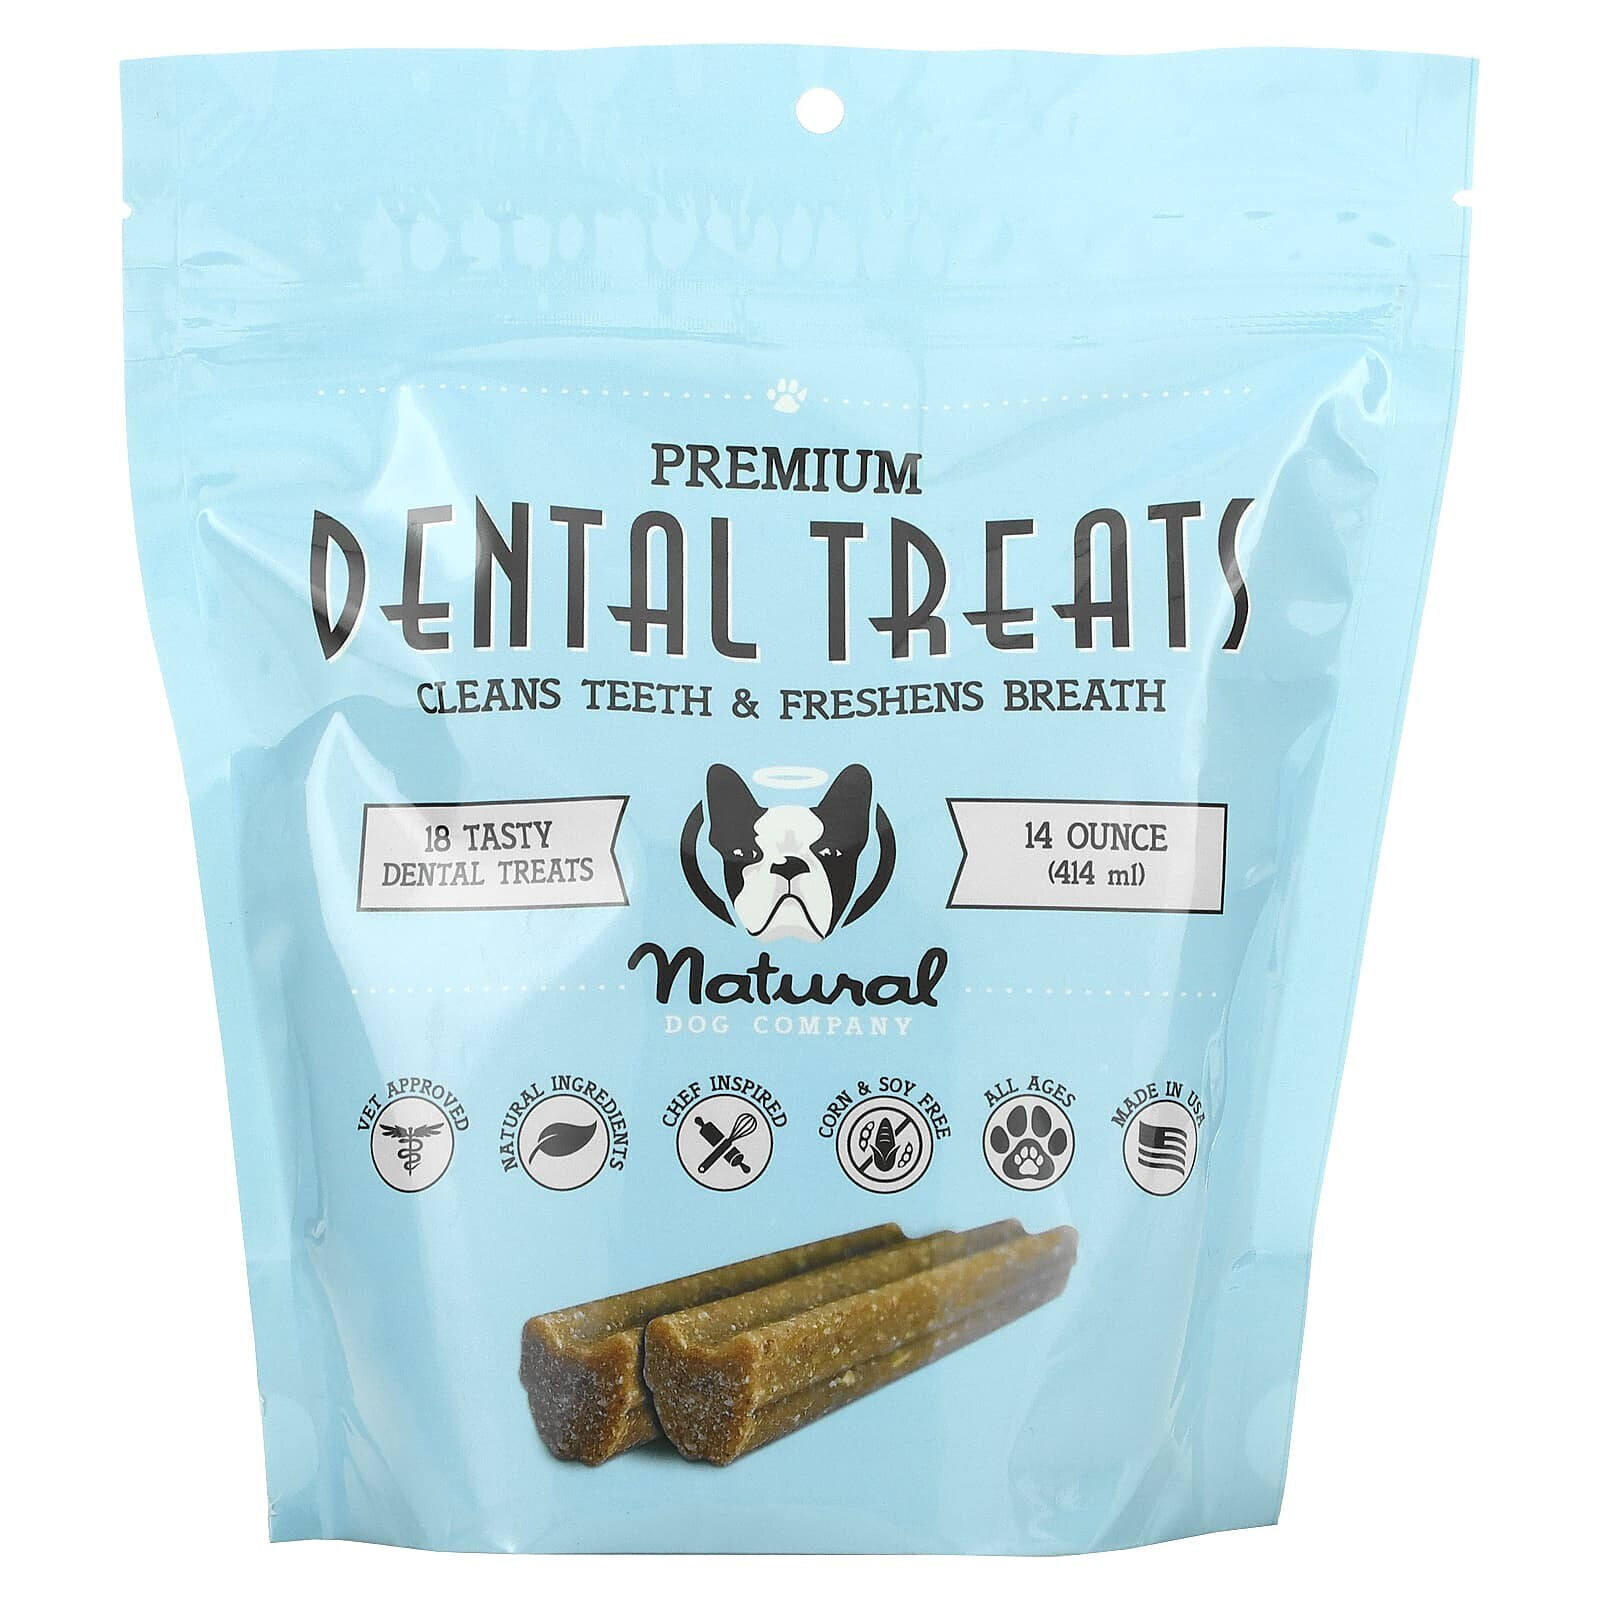 Premium Dental Treats, For Dogs, All Ages, 18 Dental Treats, 14 oz (397 ml)